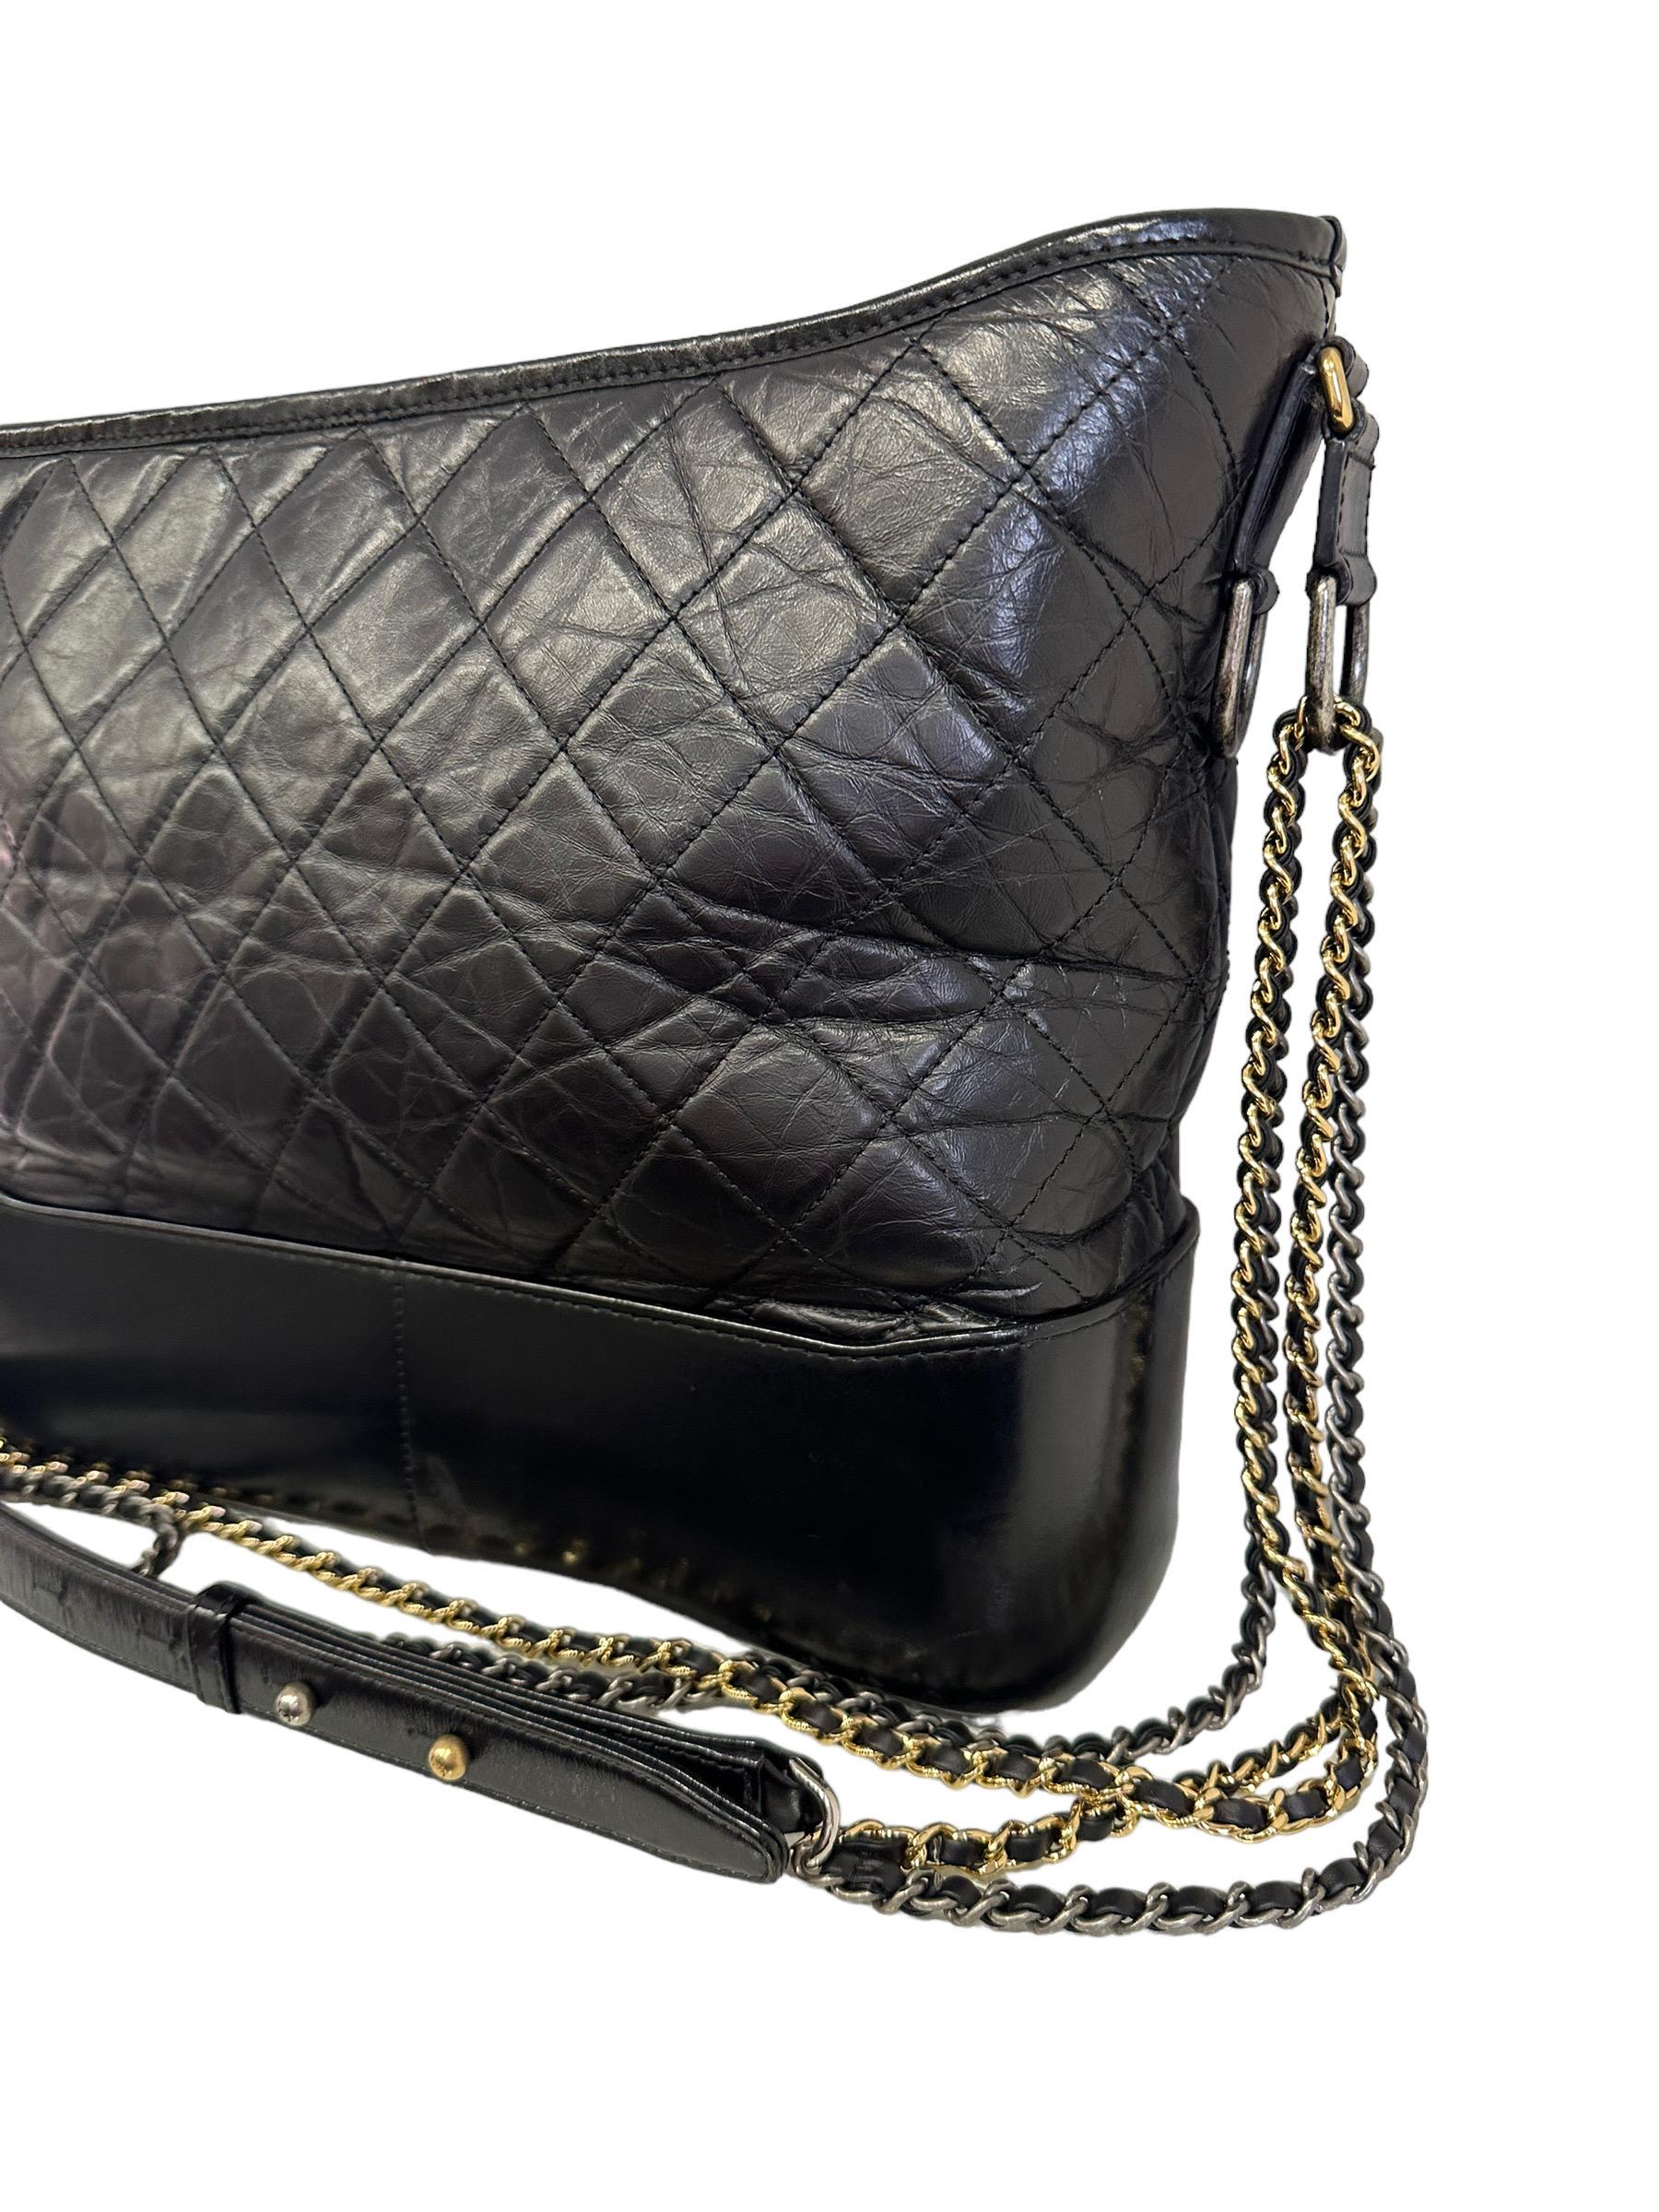 2018 Chanel Gabrielle Maxi Black Leather Top Shoulder Bag For Sale 3